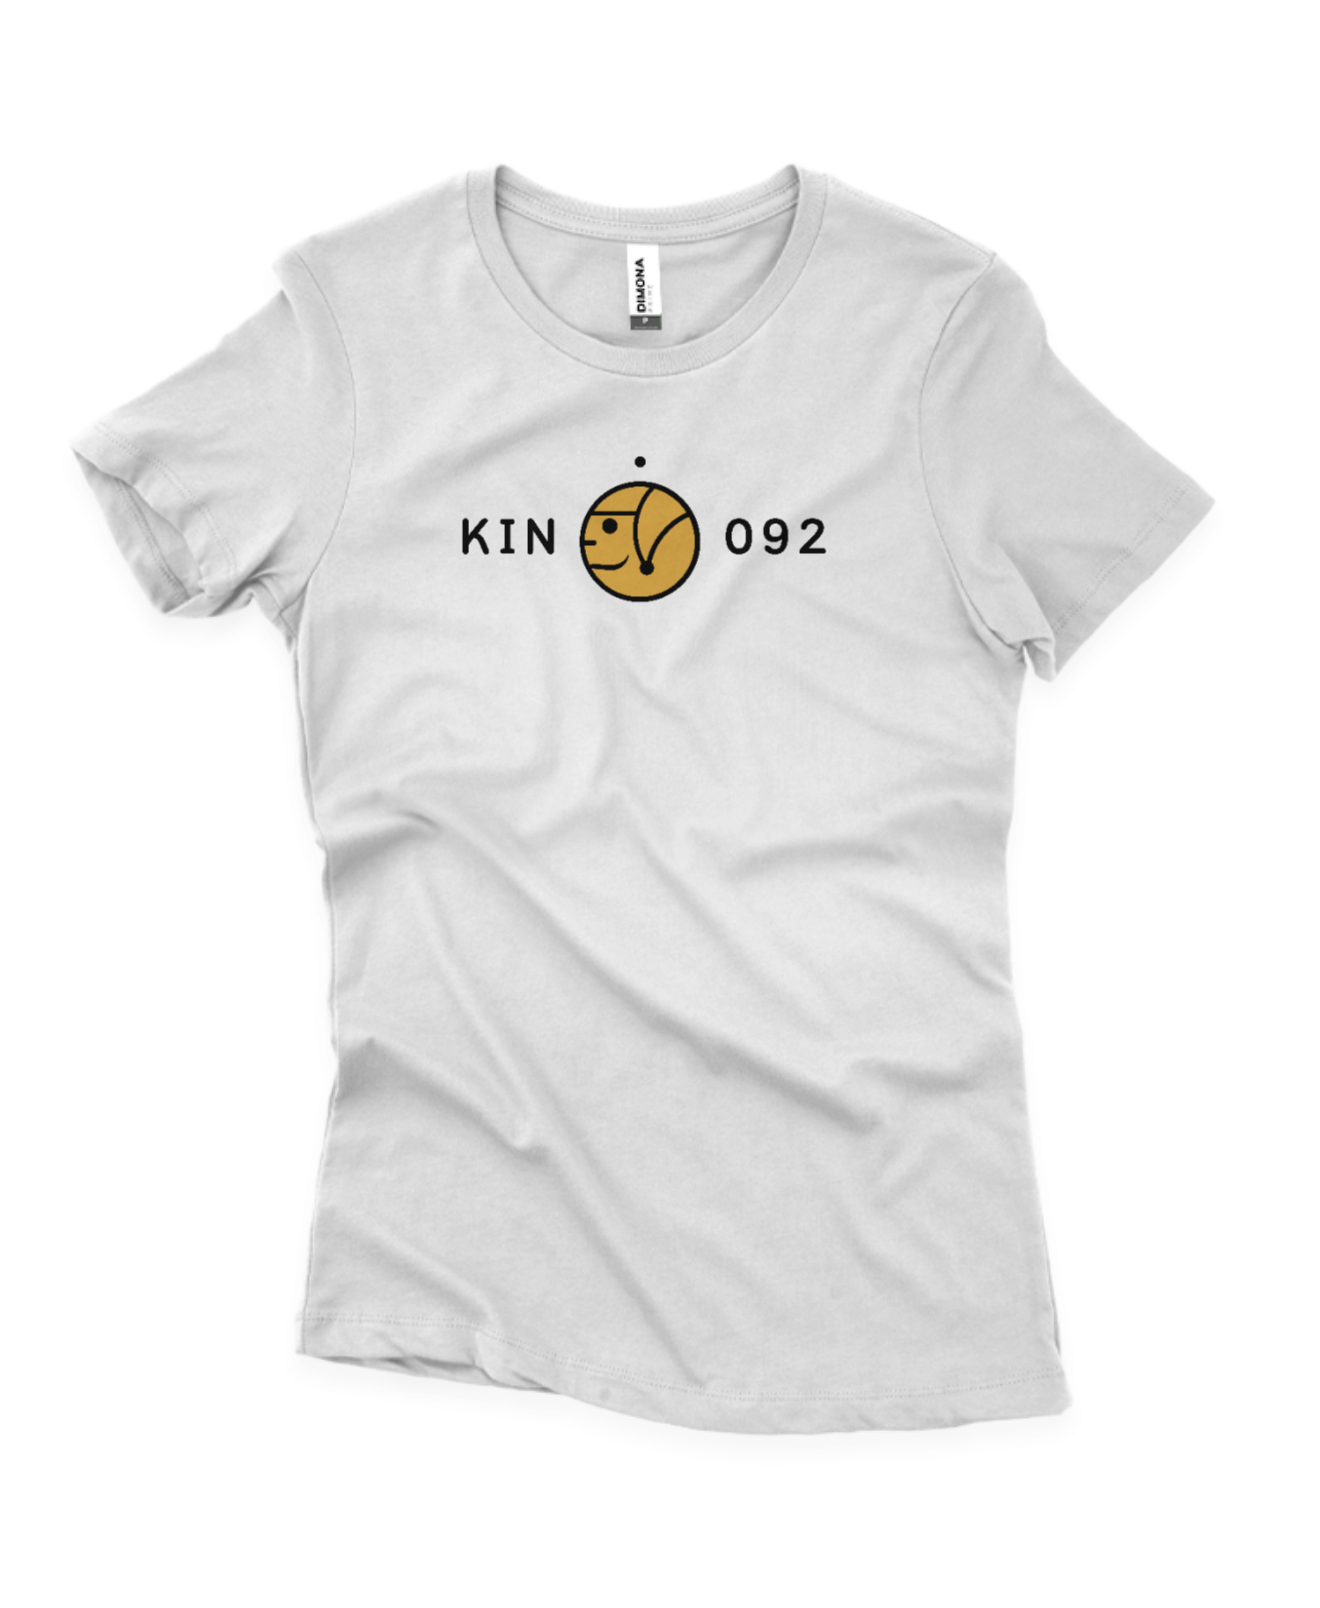 Camisa Feminina Branca Kin 092 - Humano Magnético Amarelo - Kin 92